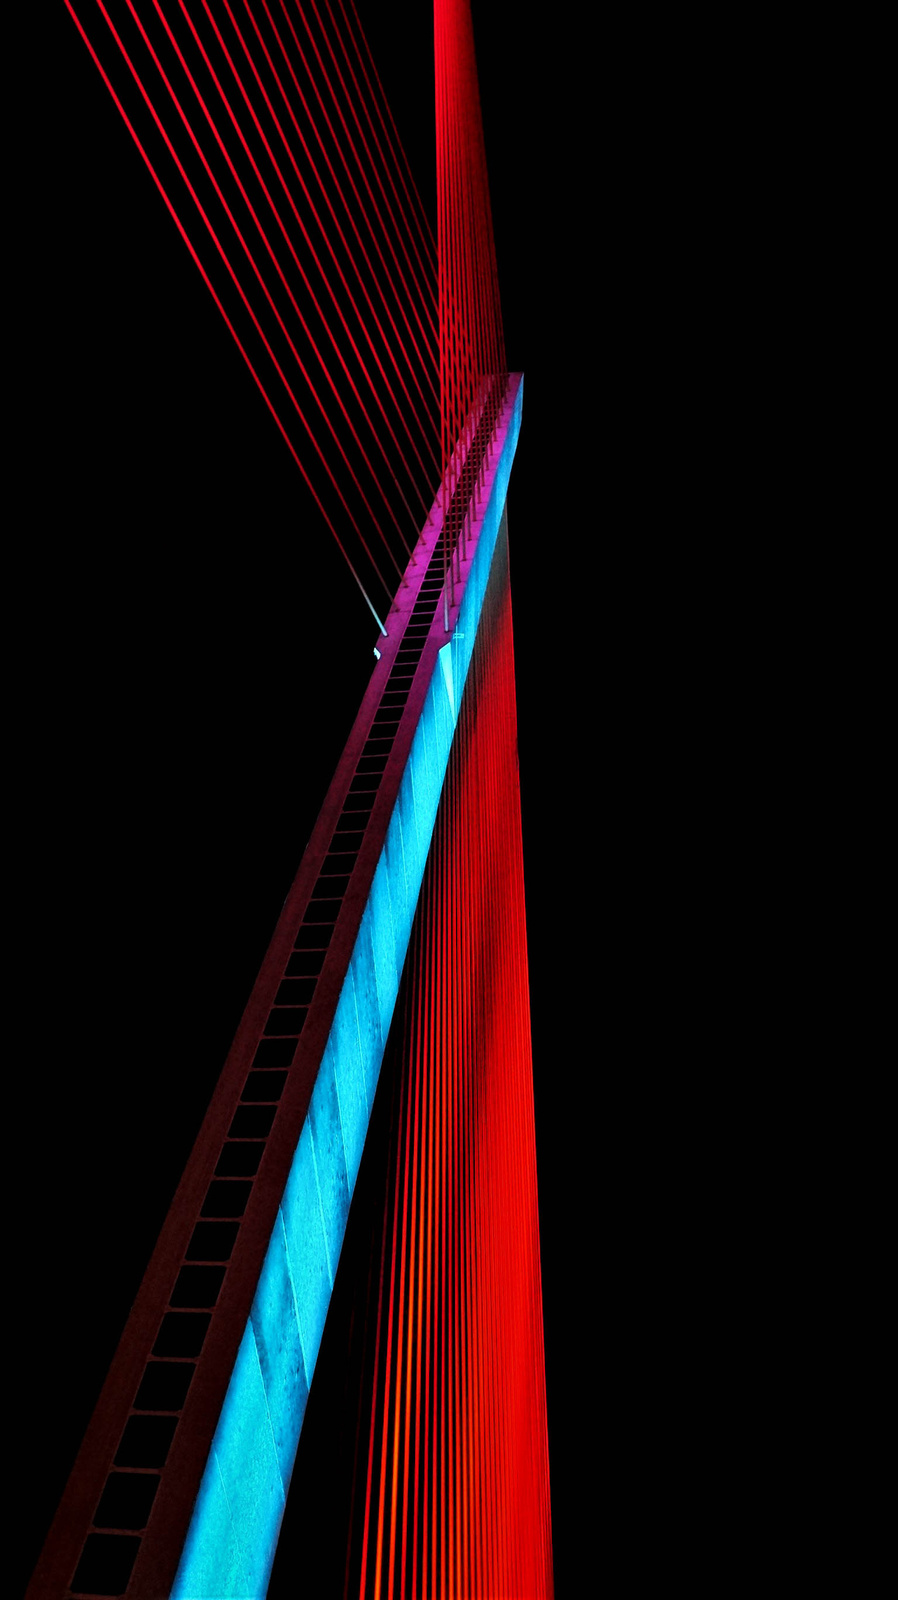 lightbridge in different perspective 2 Digital 2018 Palágyi Barb